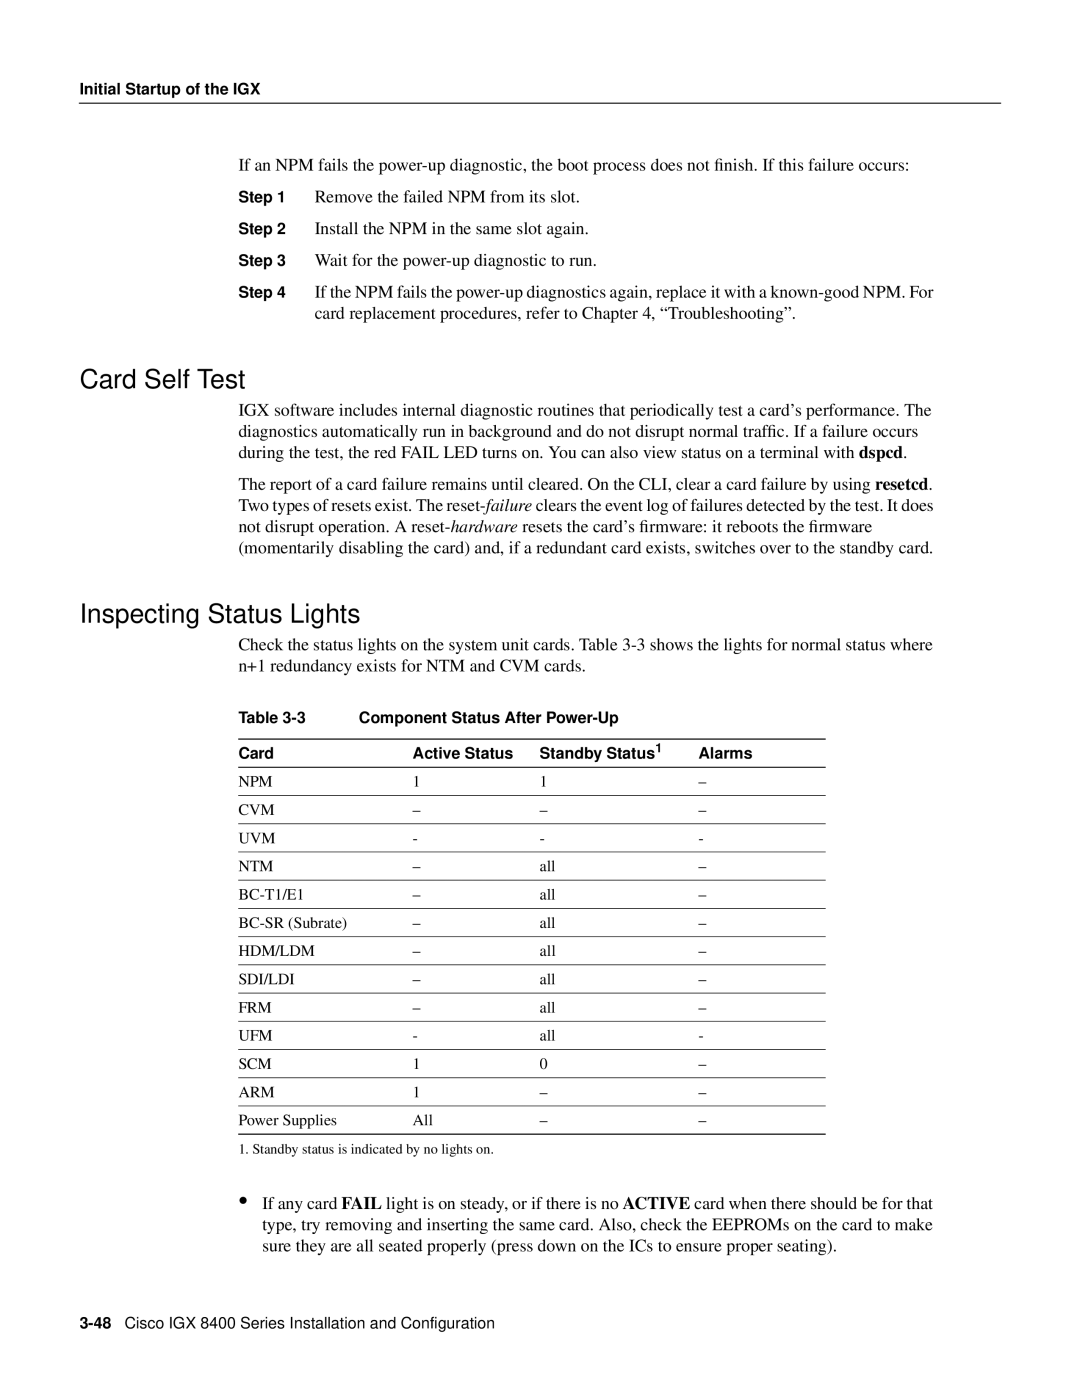 Cisco Systems IGX 8400 Series manual Card Self Test, Inspecting Status Lights 